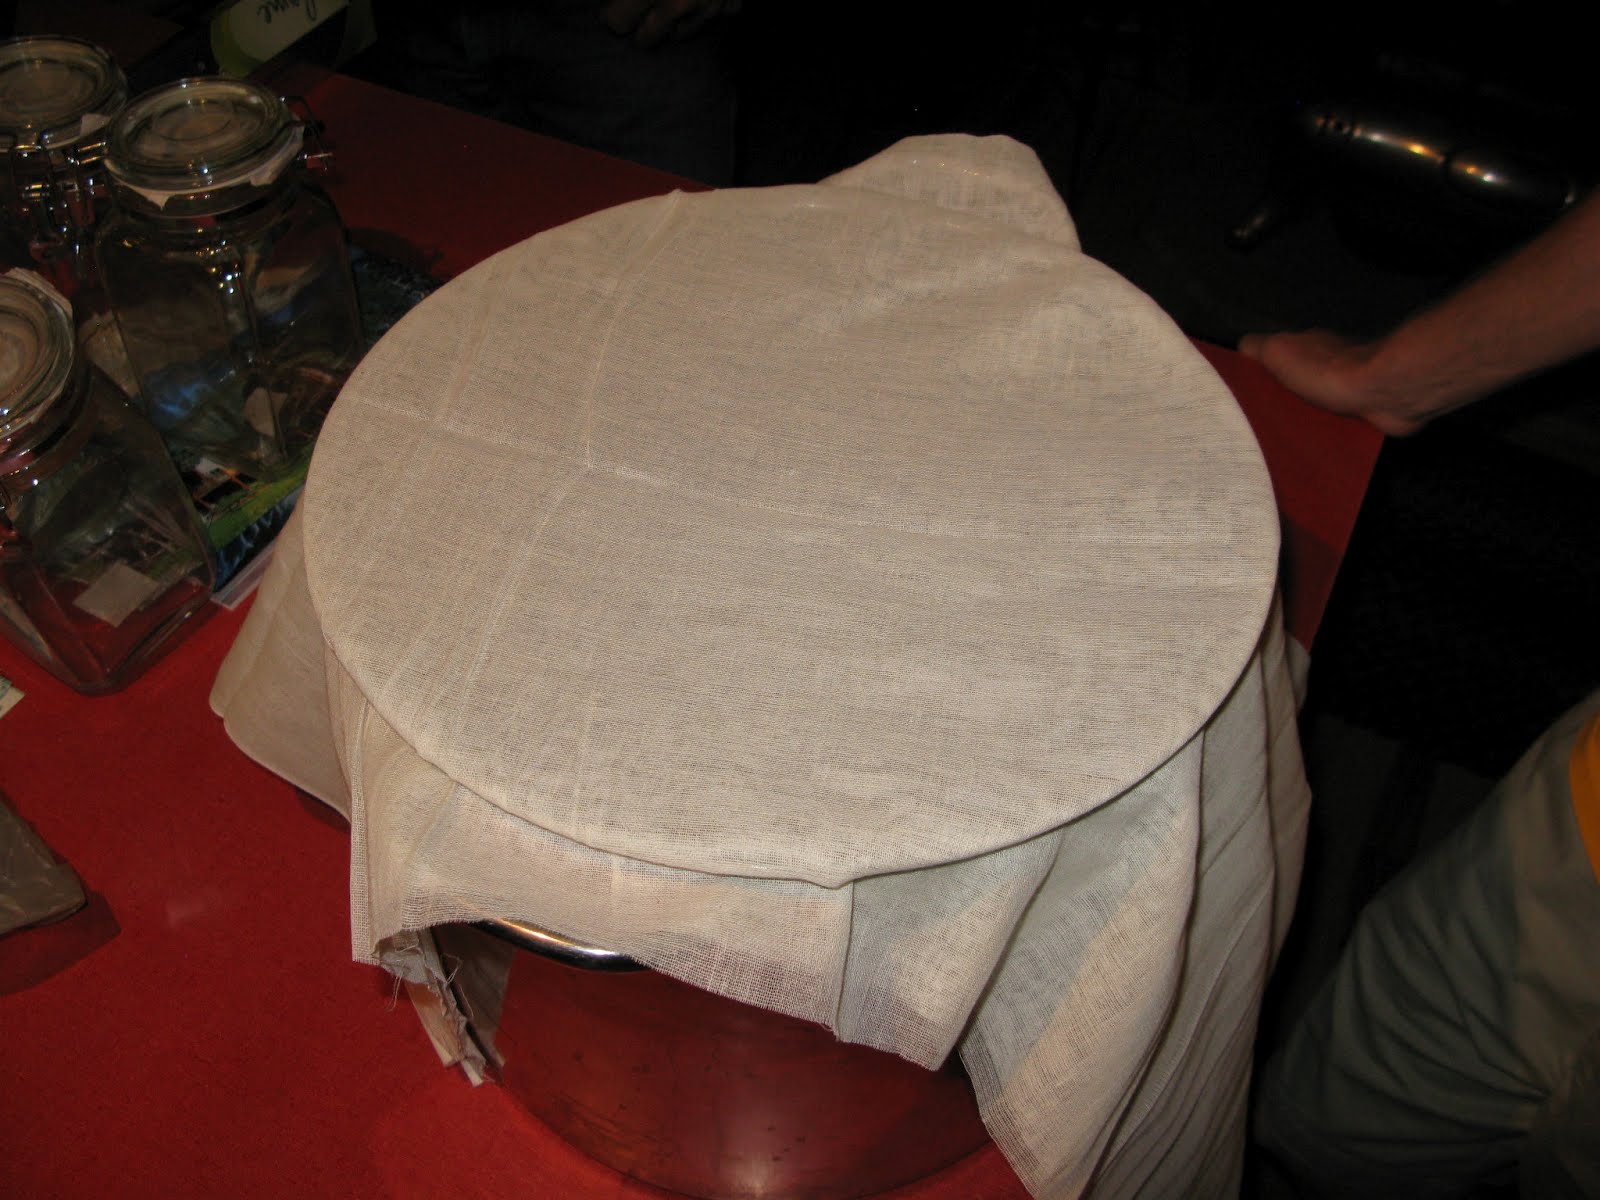 Cheesecloth over chokecherry wine fermentation vessel